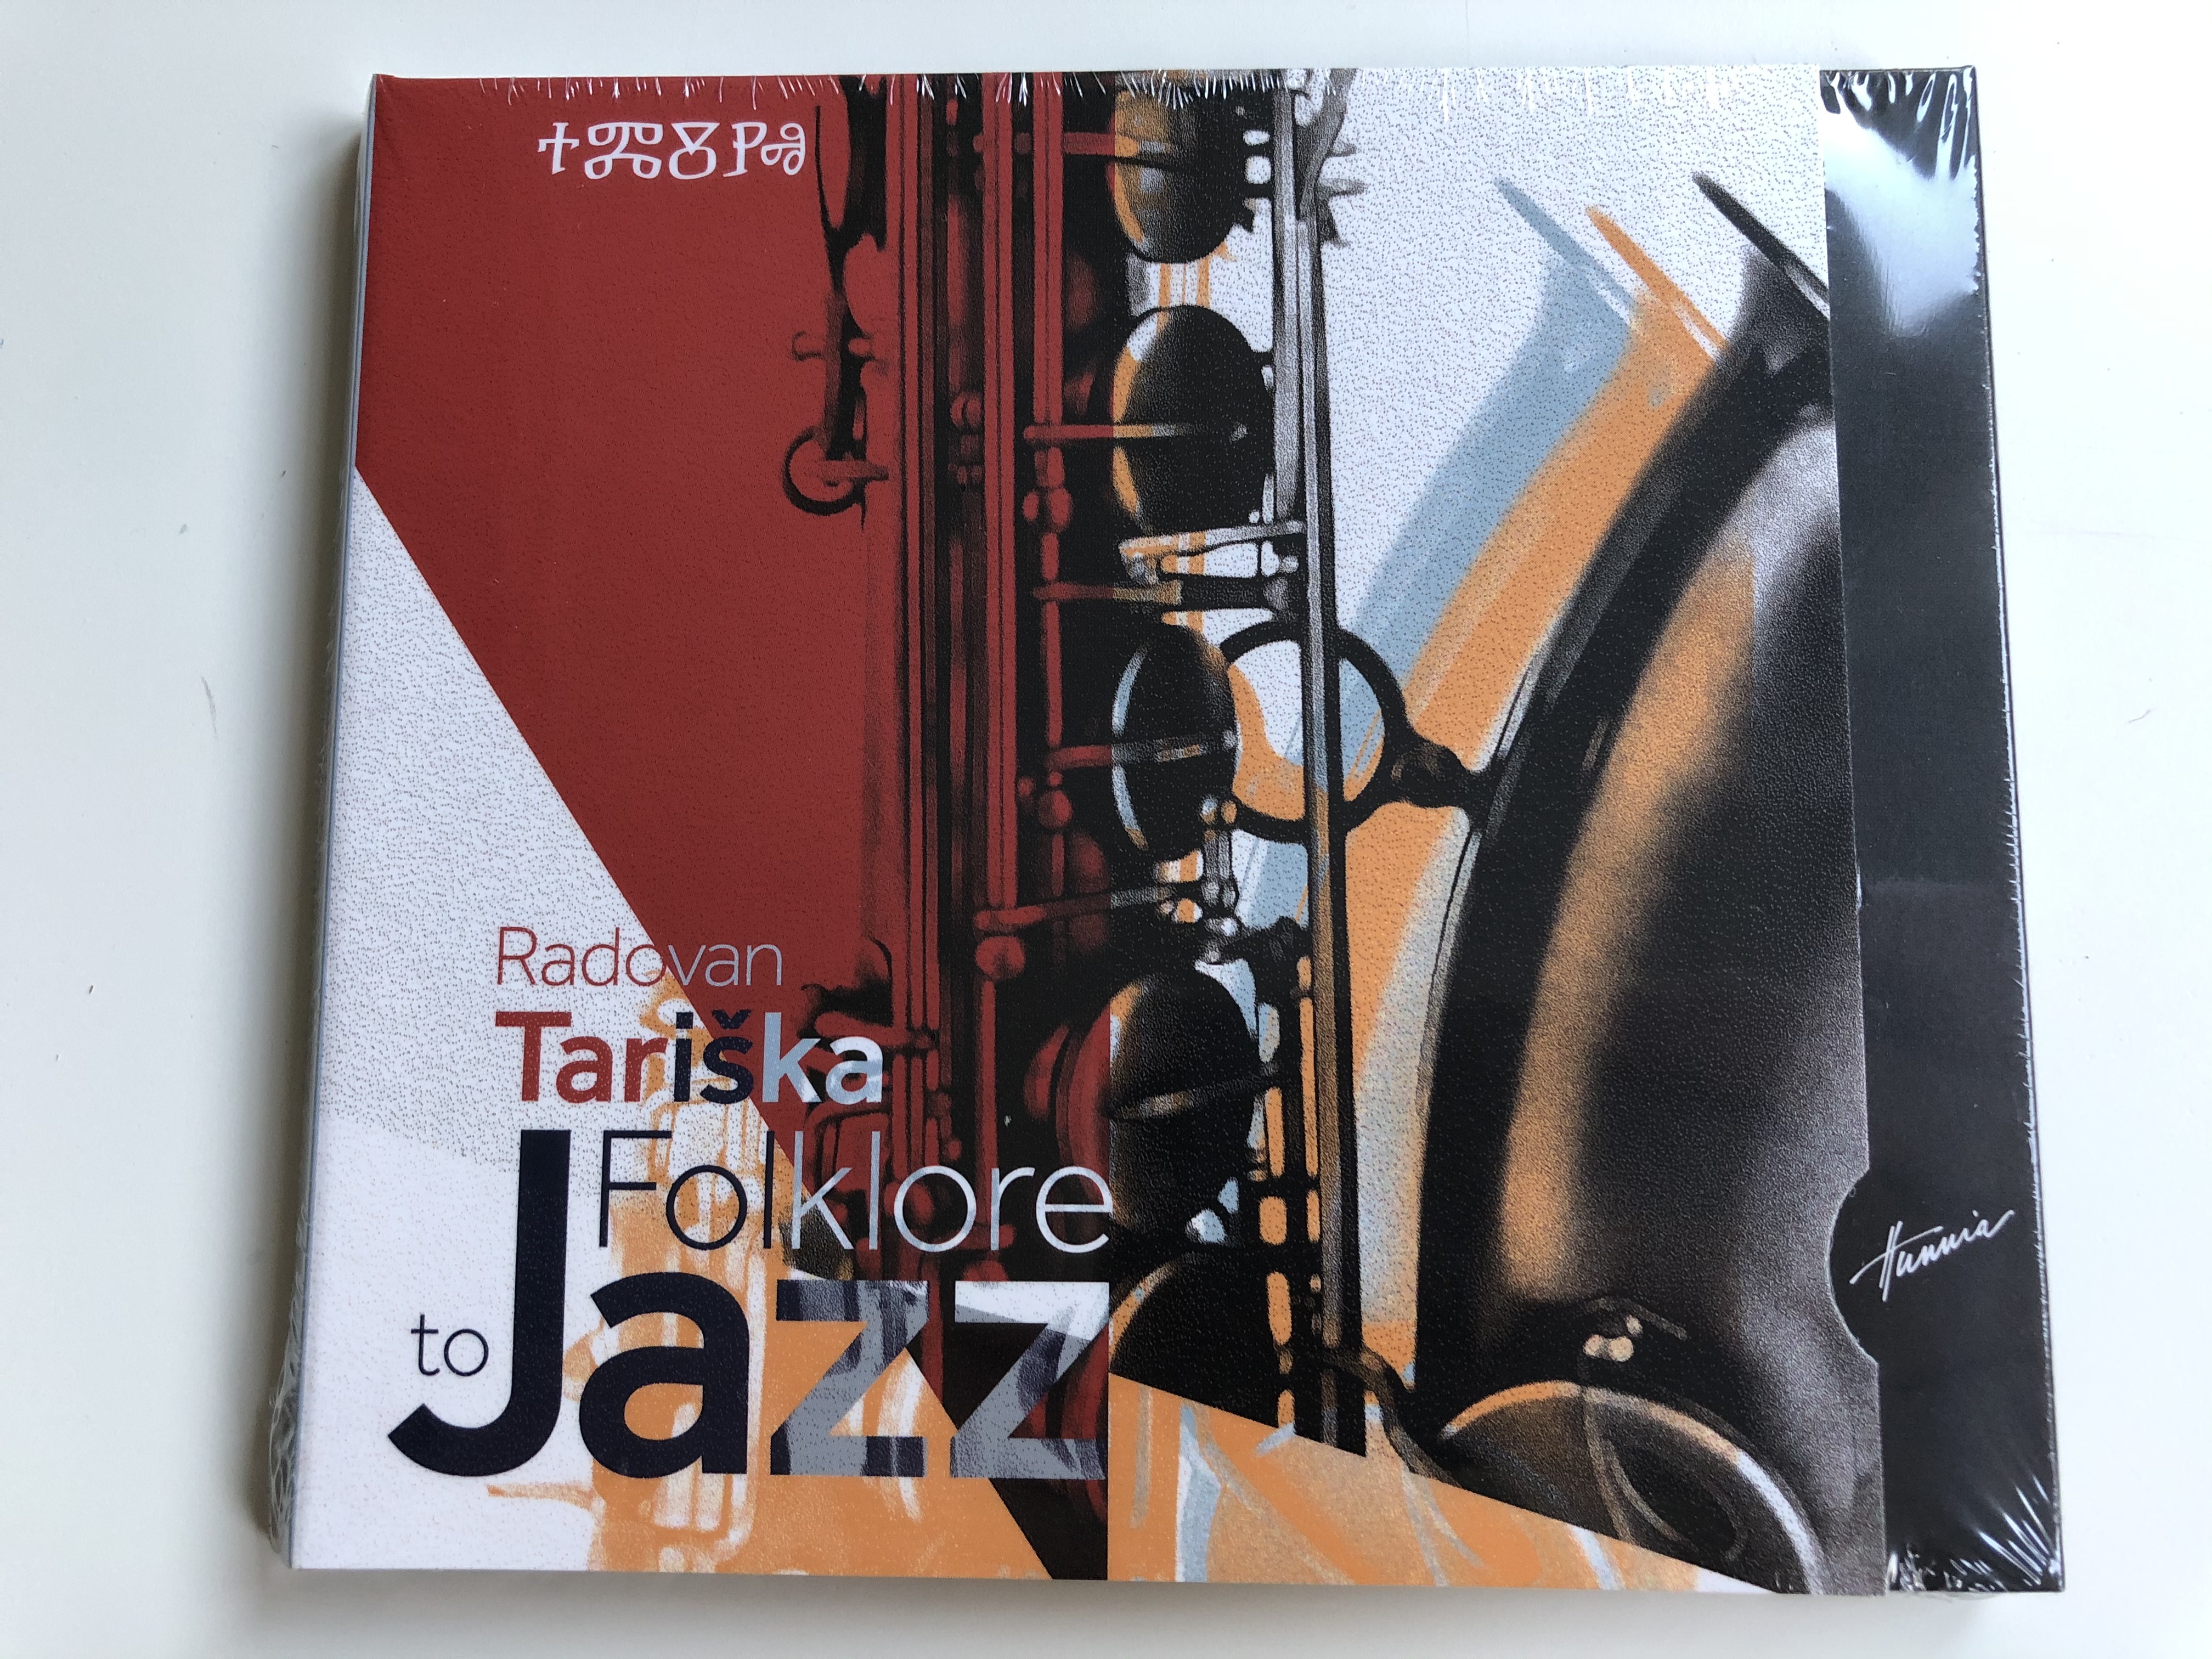 radovan-tari-ka-folklore-to-jazz-hunnia-records-film-production-audio-cd-2013-hrcd1301-1-.jpg